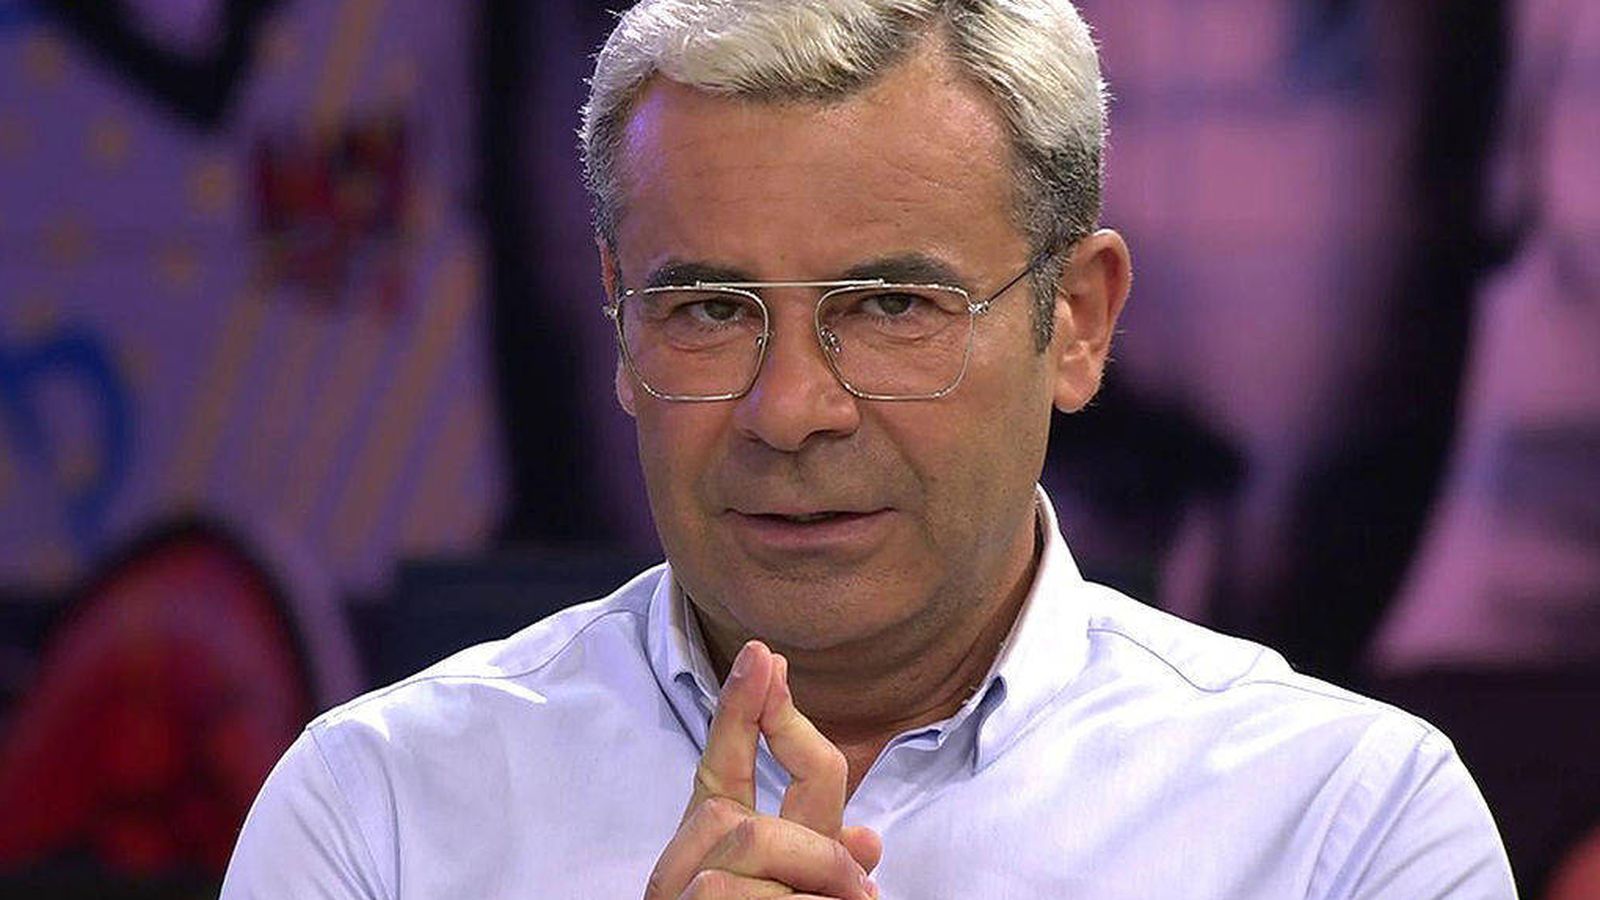 Foto: Jorge Javier durante la emisión de 'Sálvame'. (Mediaset)